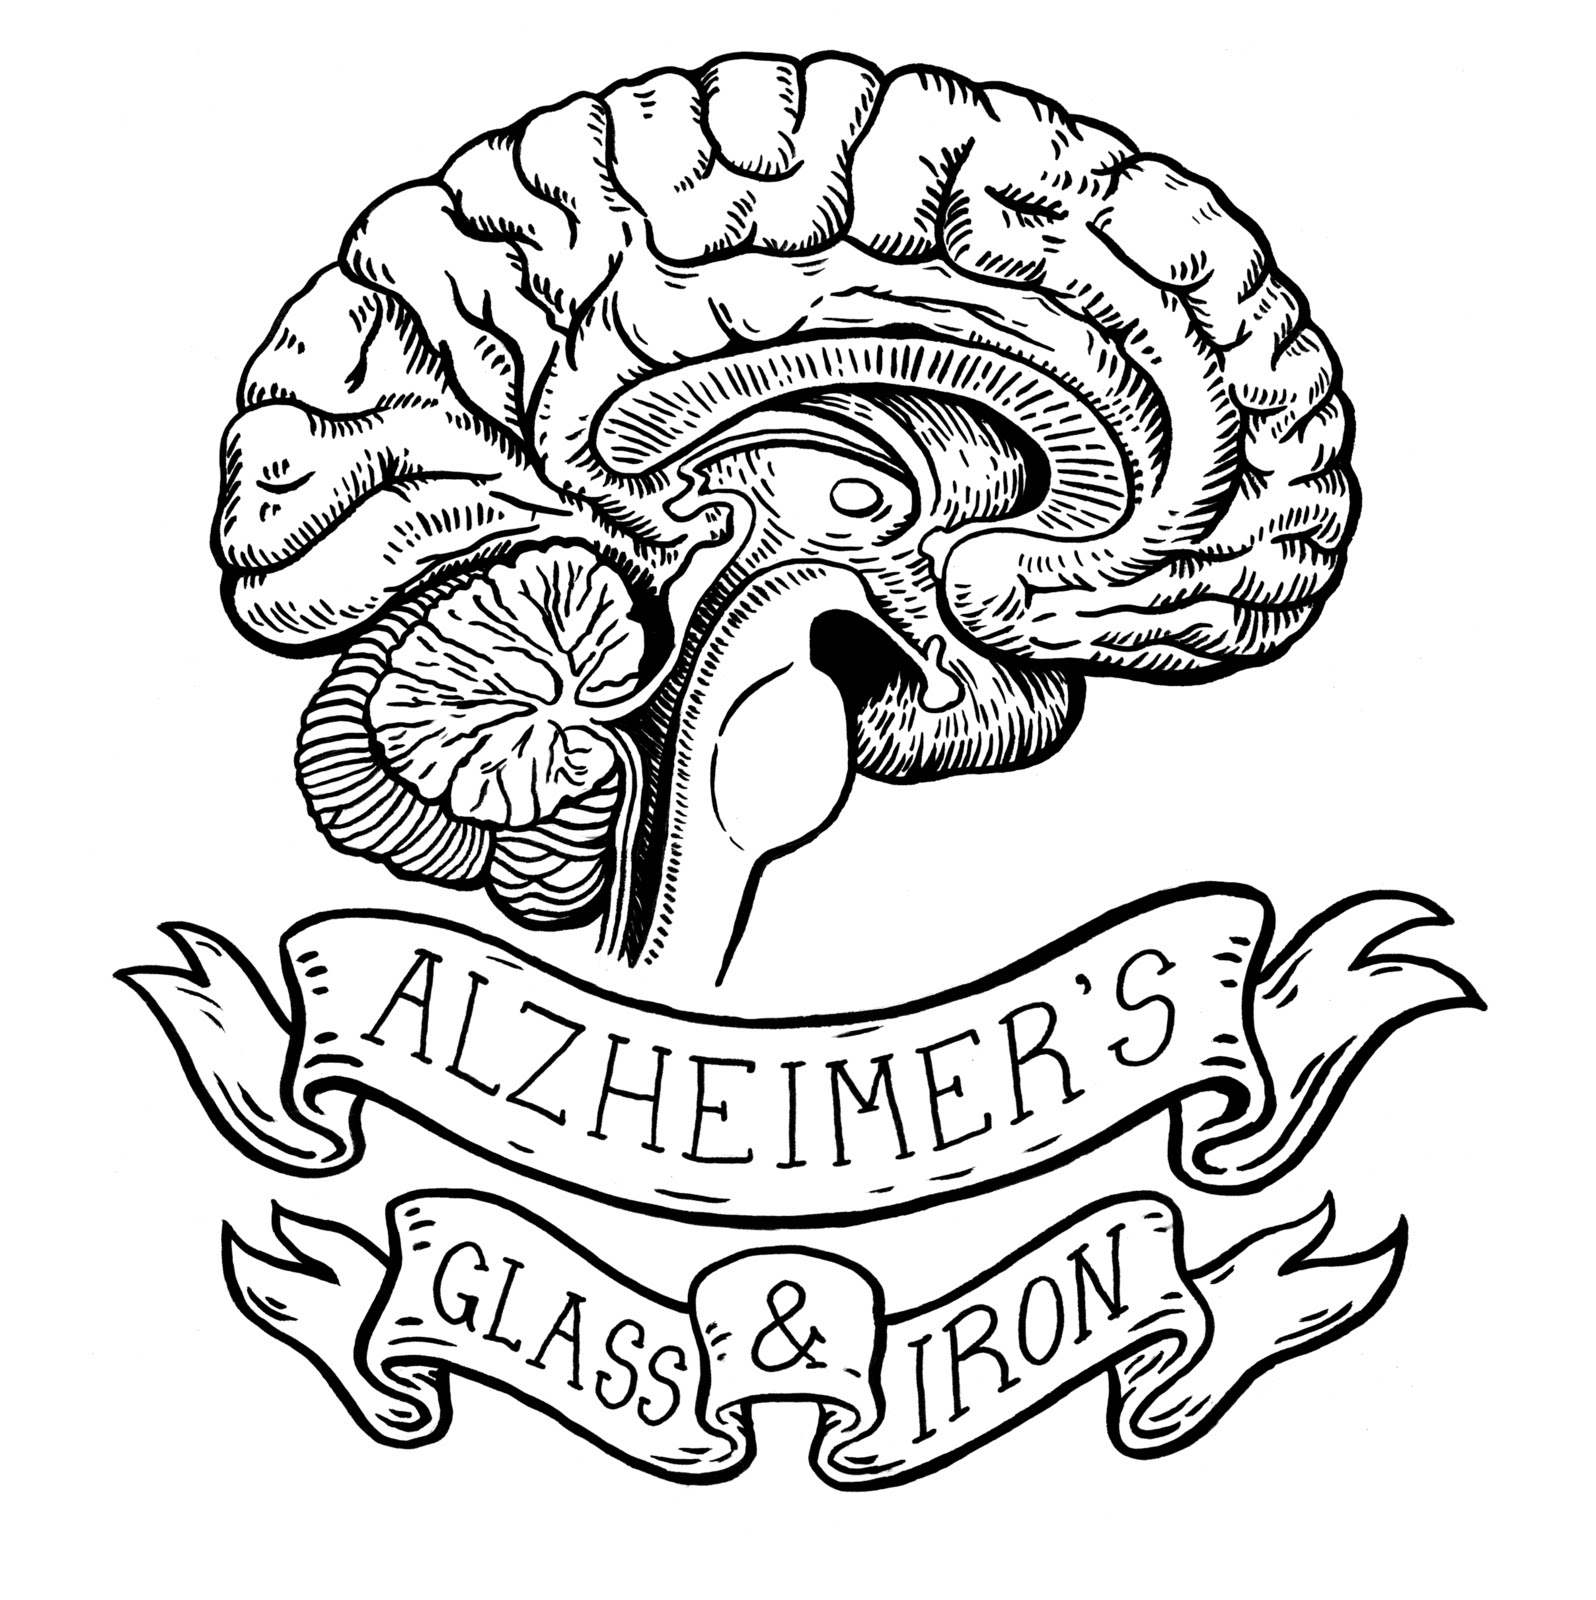 Alzheimer's Glass and Iron